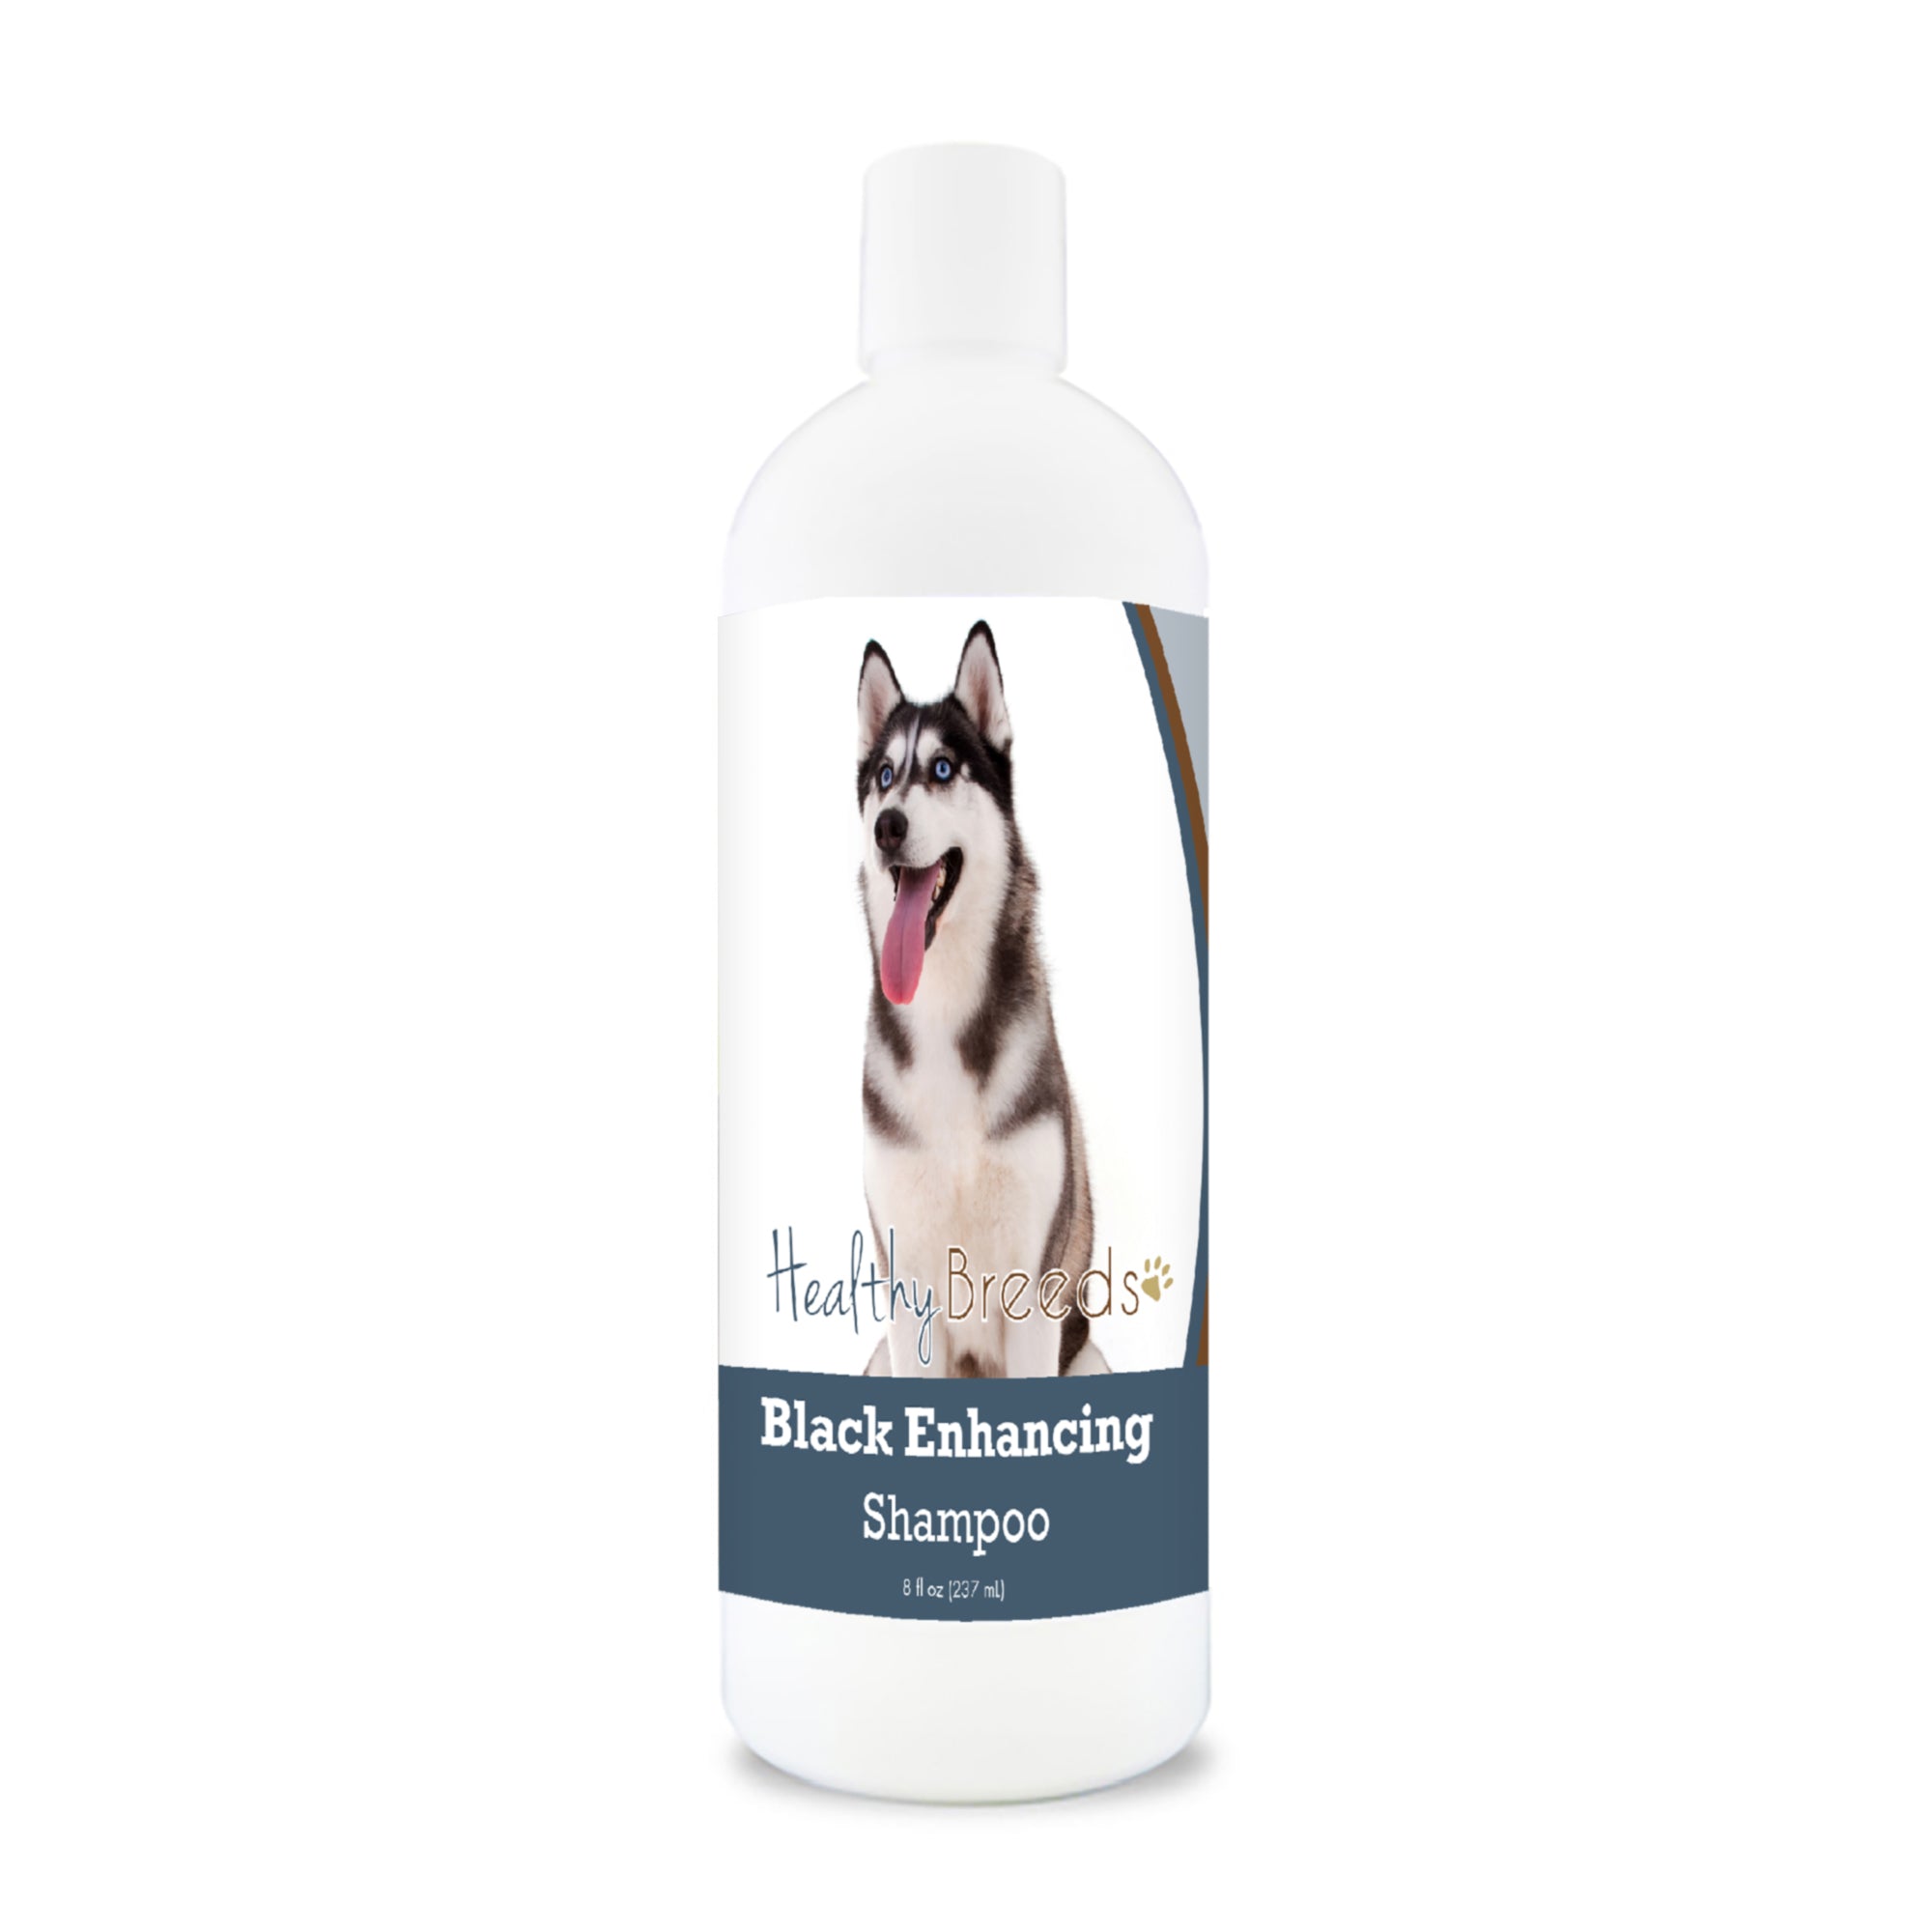 Siberian Husky Black Enhancing Shampoo 8 oz